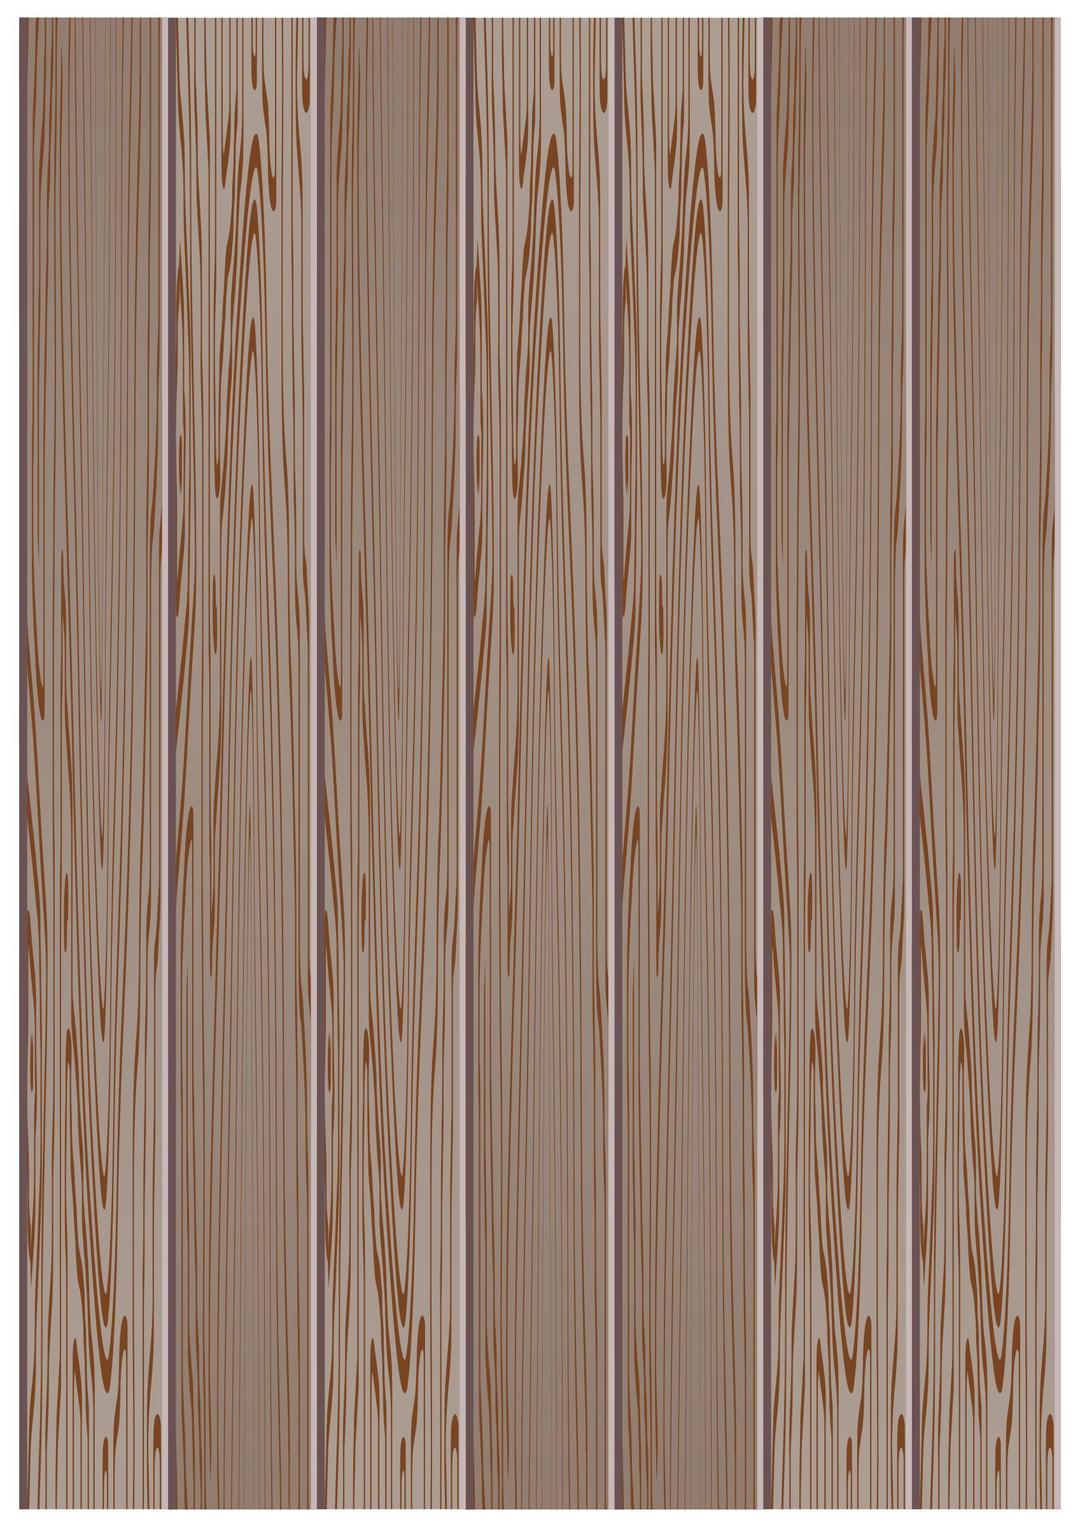 Wood board 3 png transparent